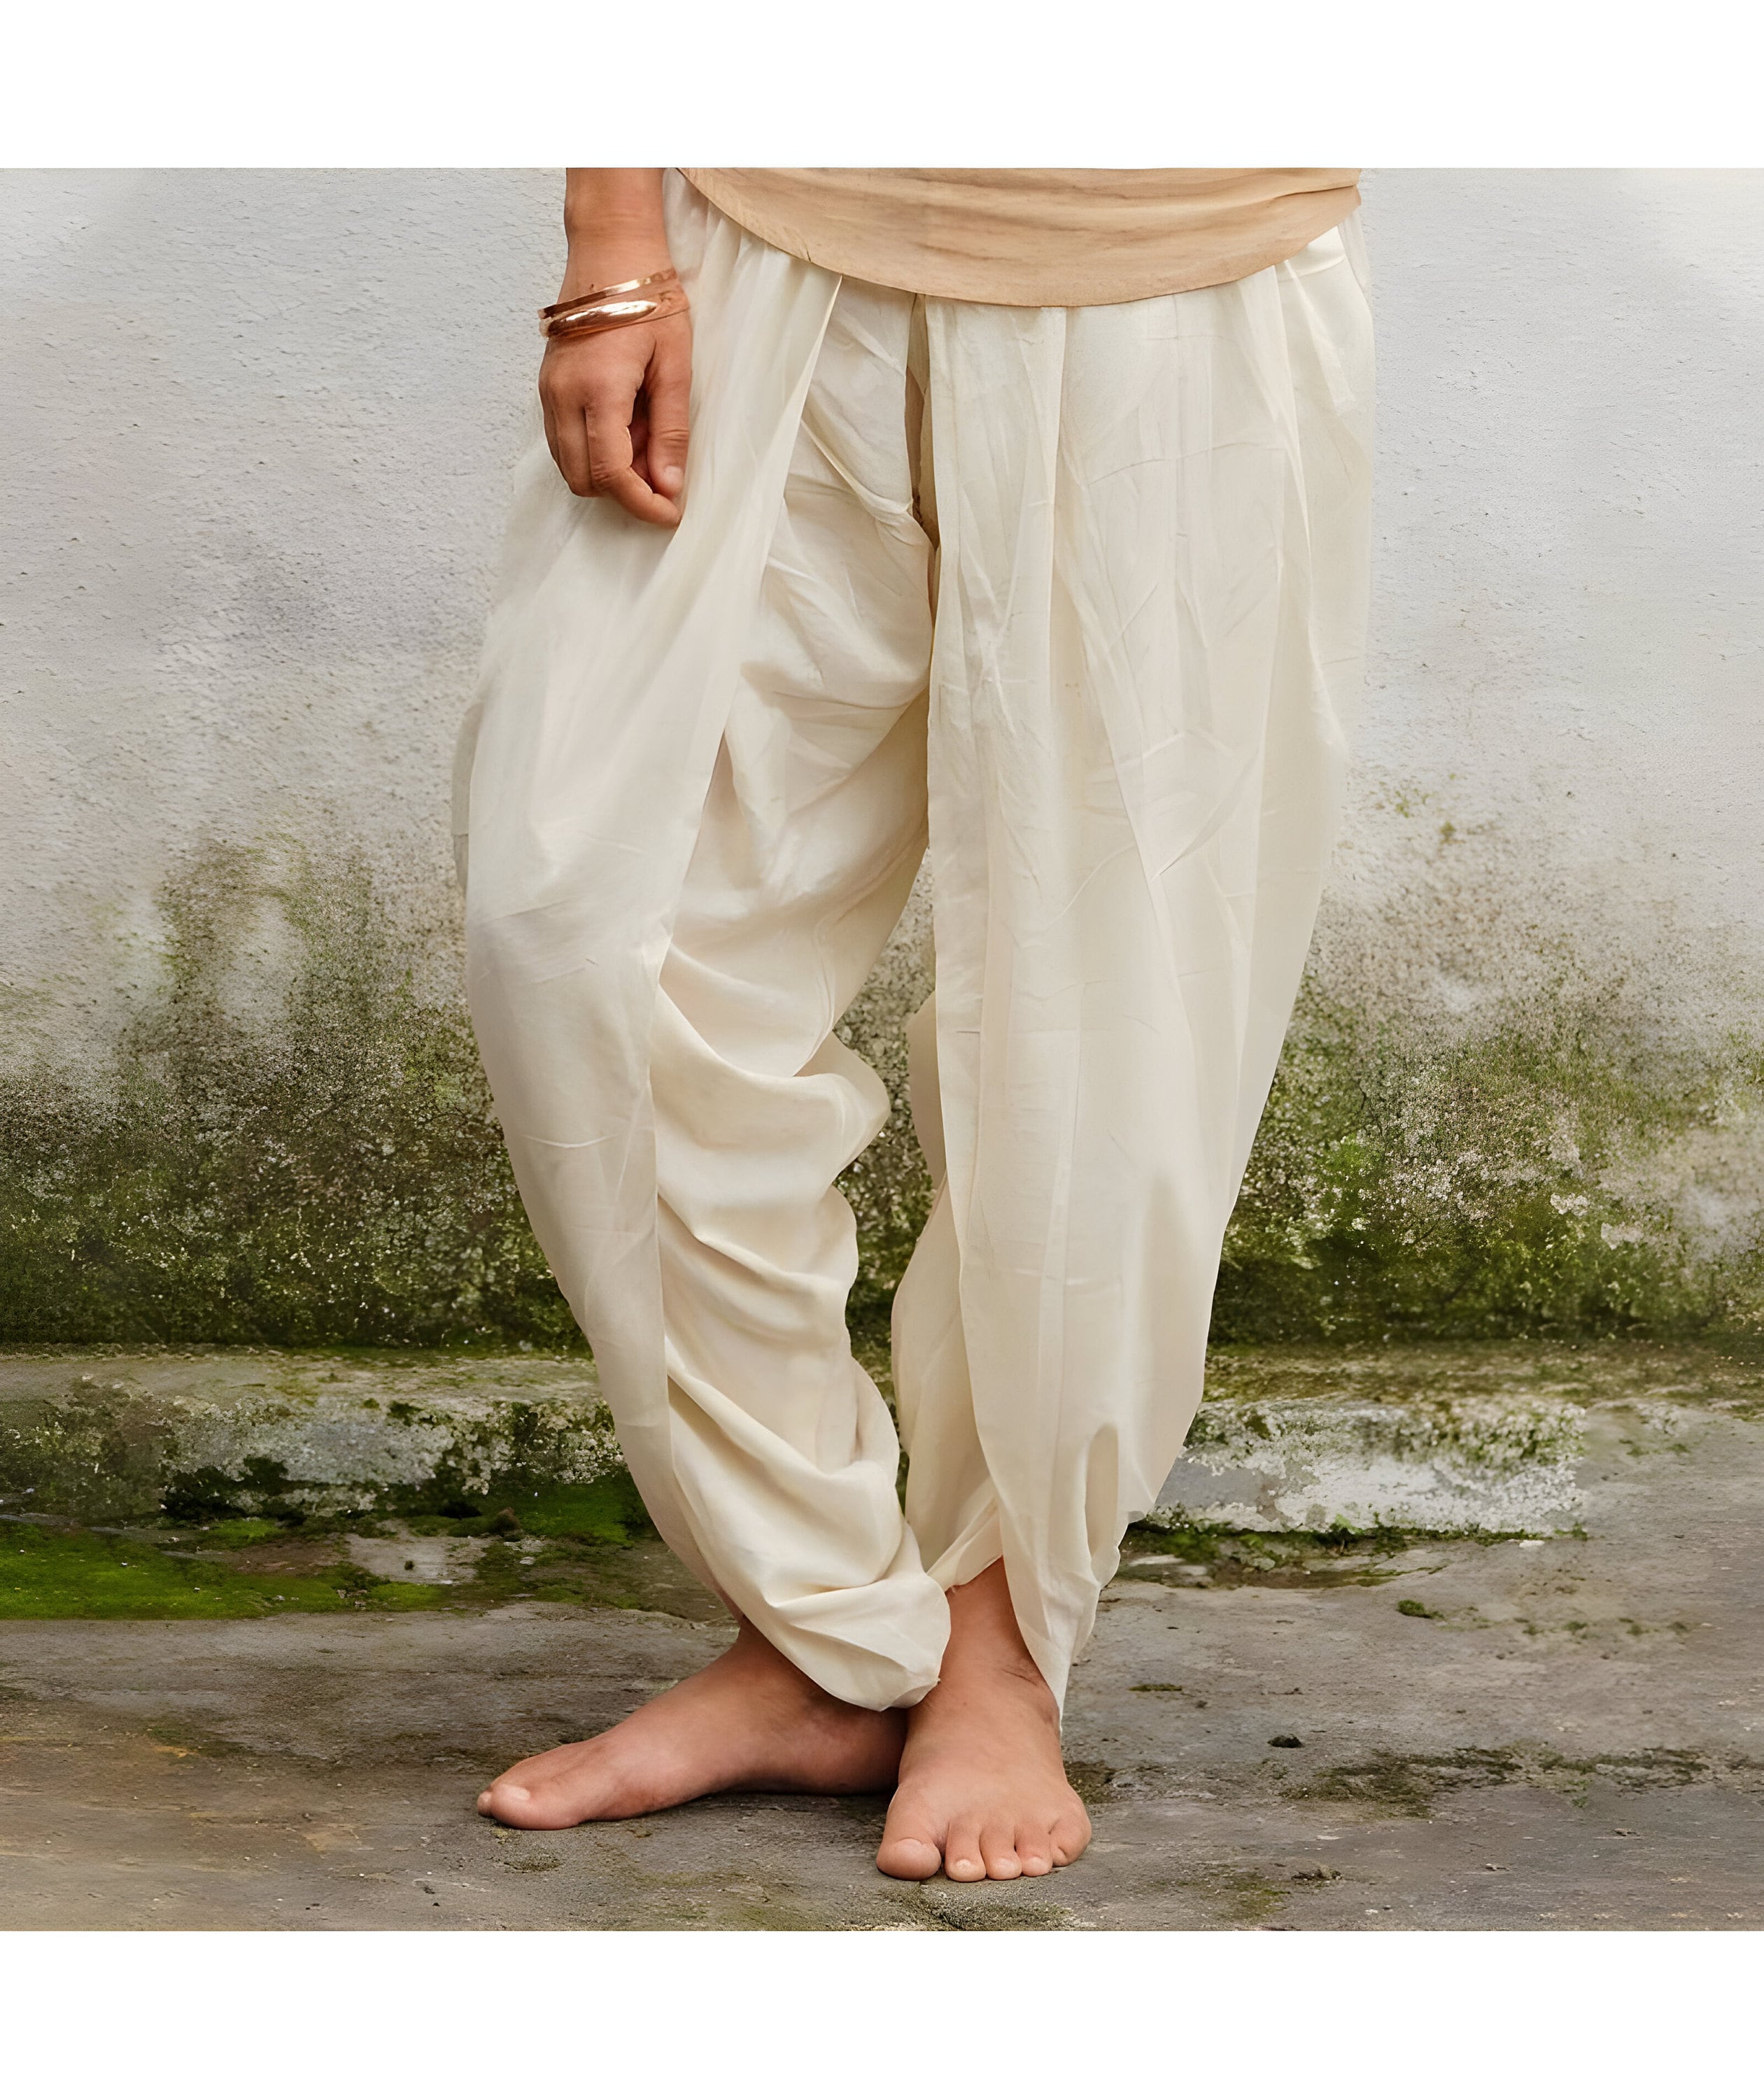 Dhoti Pants for Men | Designer Menswear Bottoms Online